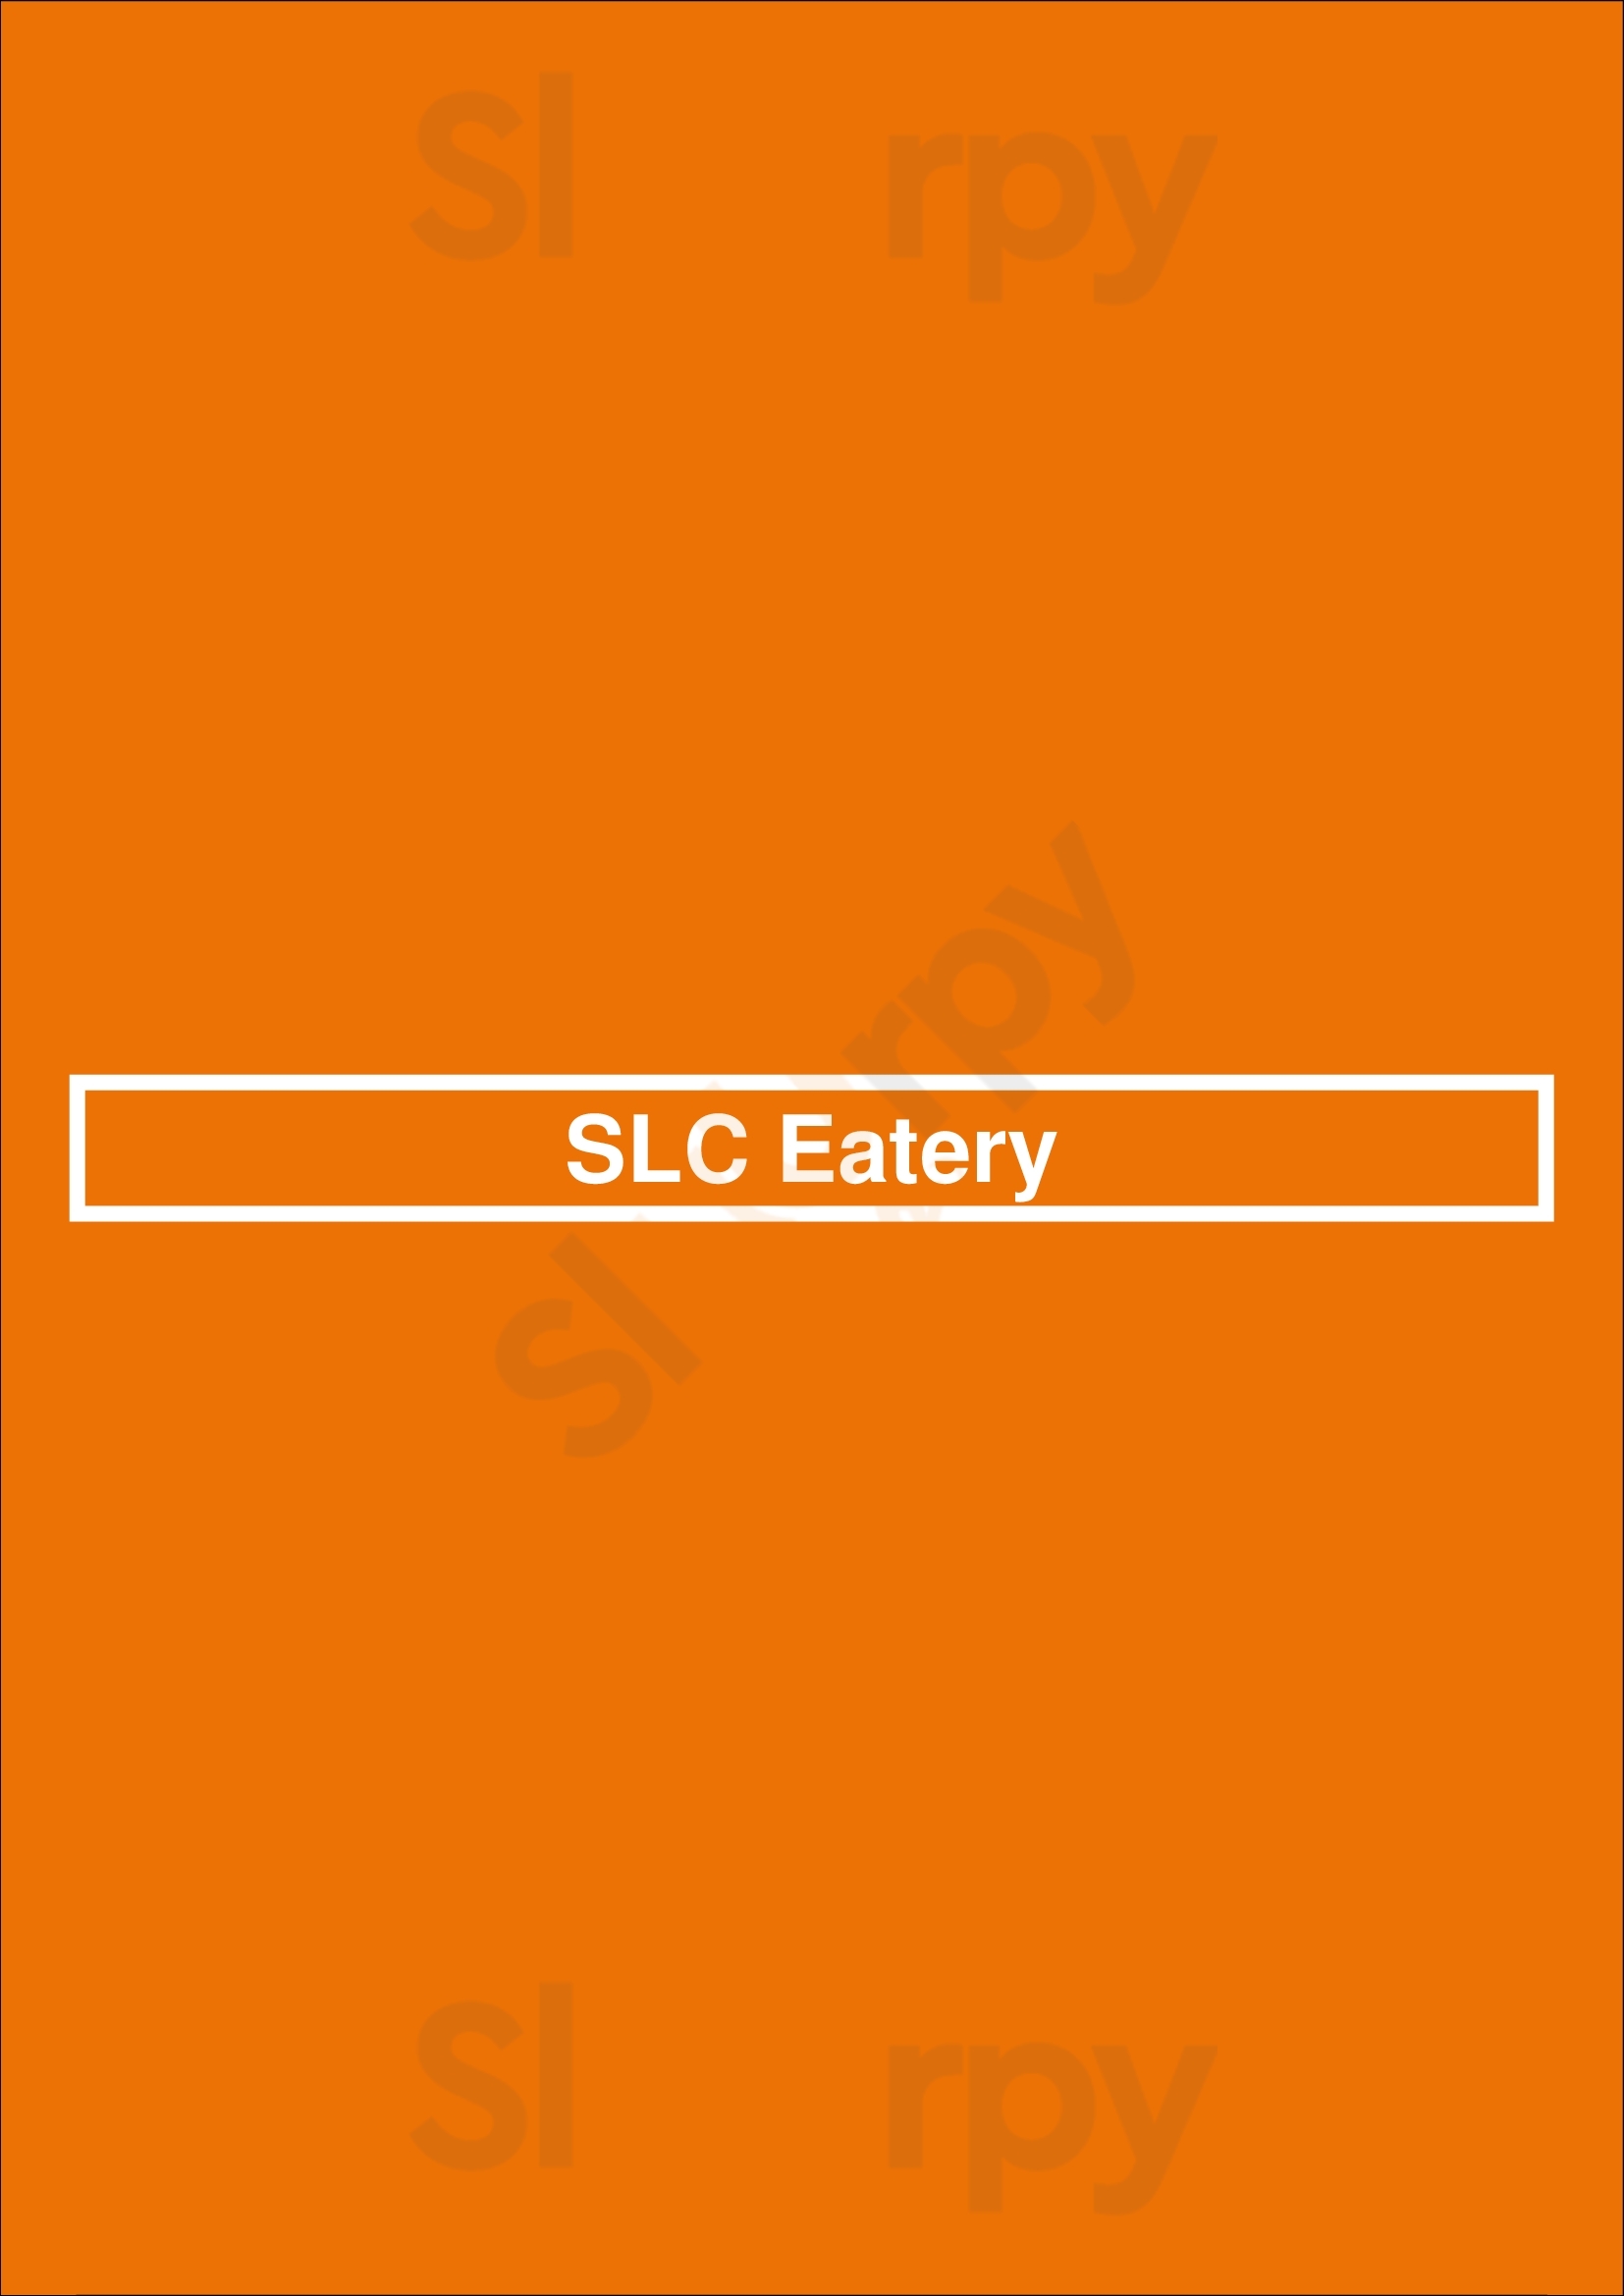 Slc Eatery Salt Lake City Menu - 1